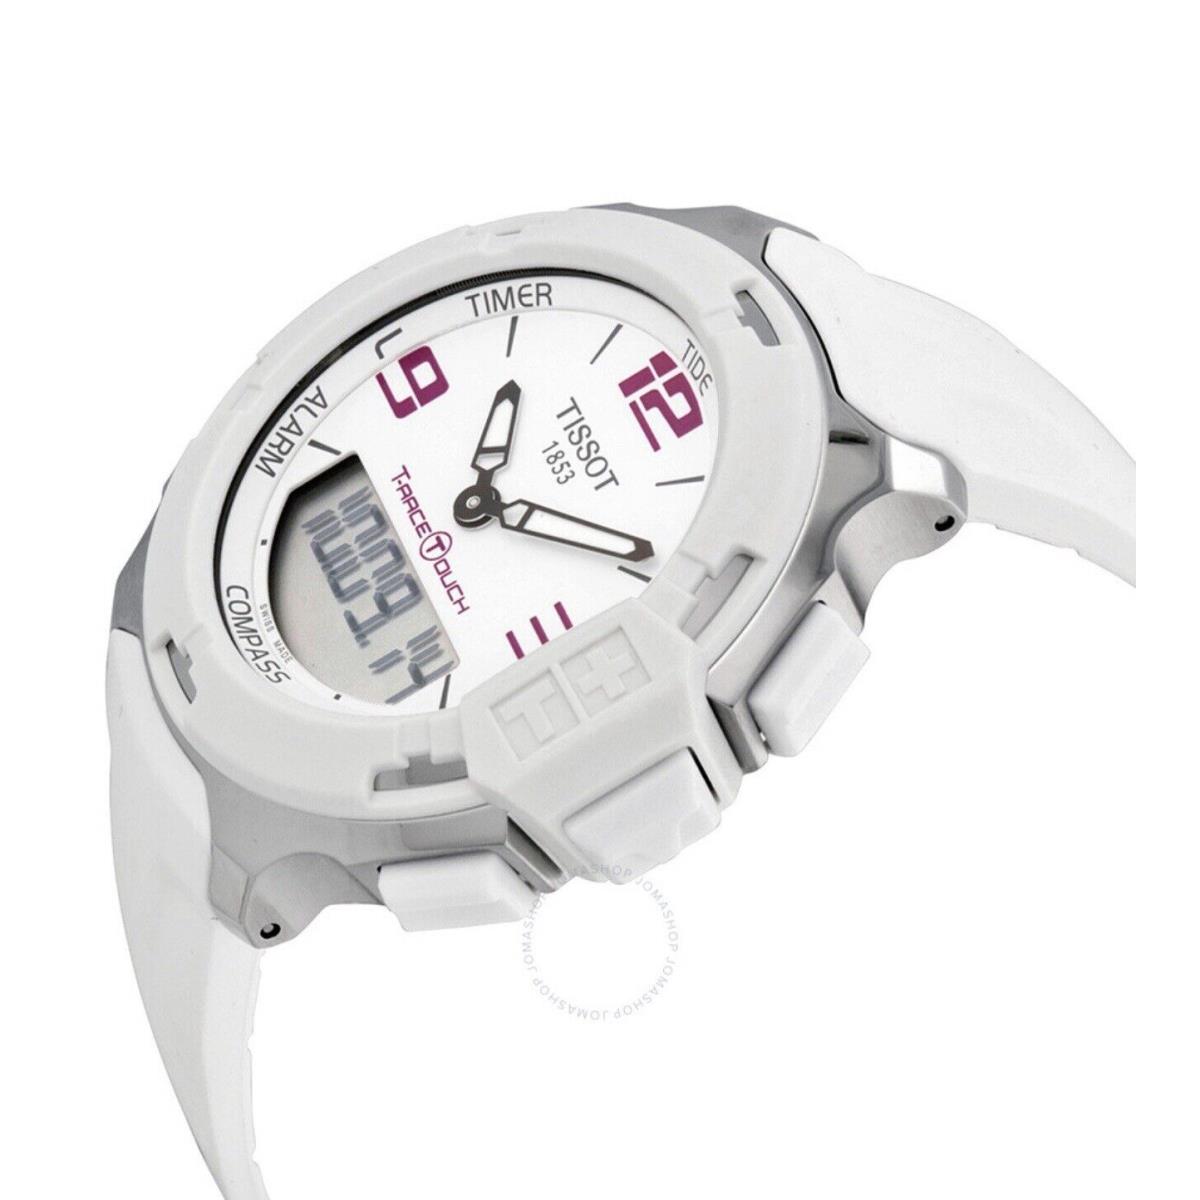 Tissot T-race Analog Digital White Rubber Unisex Watch T0814201701700